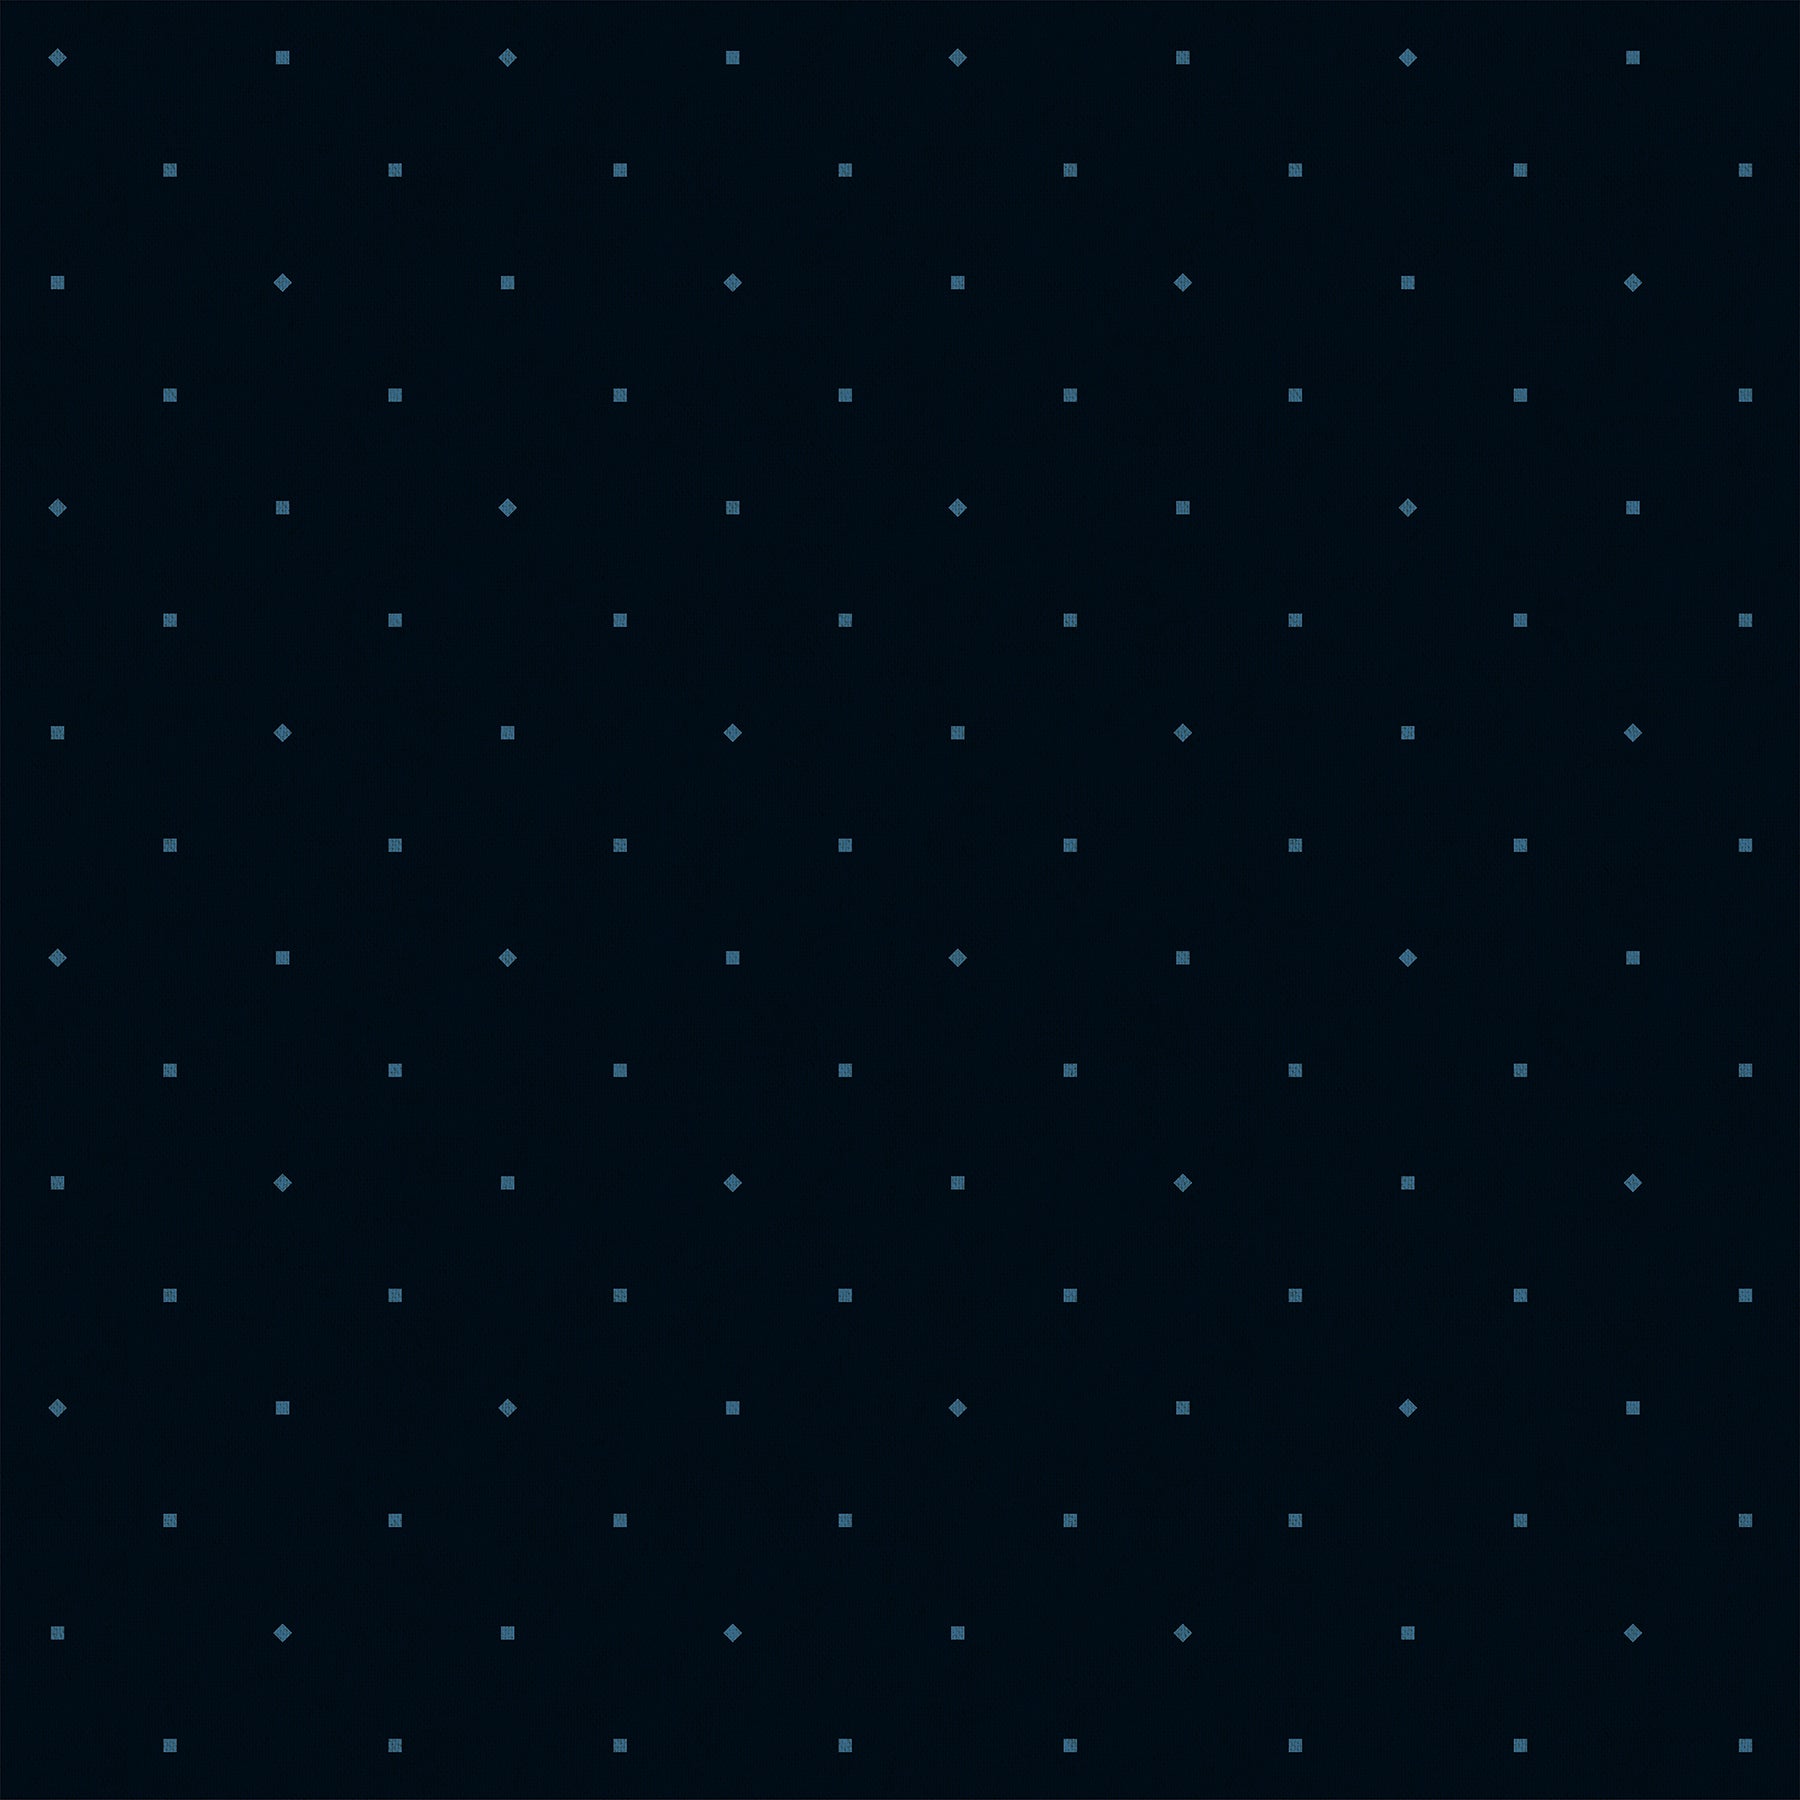 Cotton + Steel Basics Canvas Fabric - Square Up (Square Dots) in Night Owl Black  - CS103-NI10C